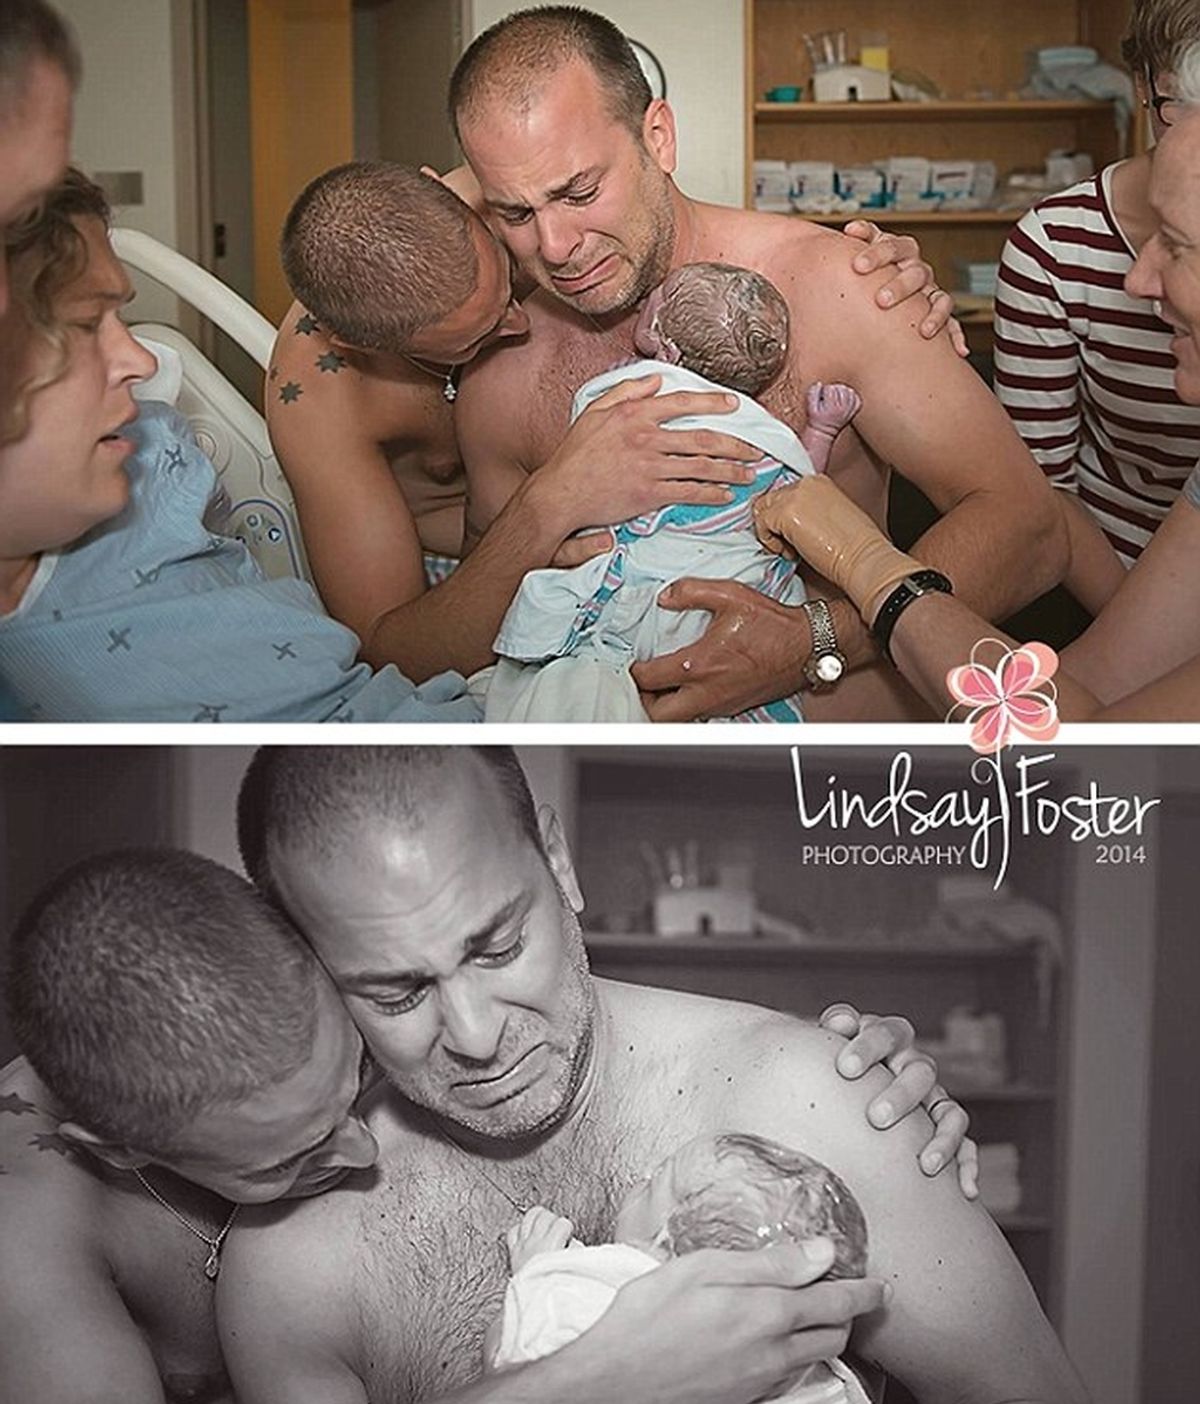 padres gais, padres gays,  Lindsay Foster, testimonio fotográfico, bebé recién nacido